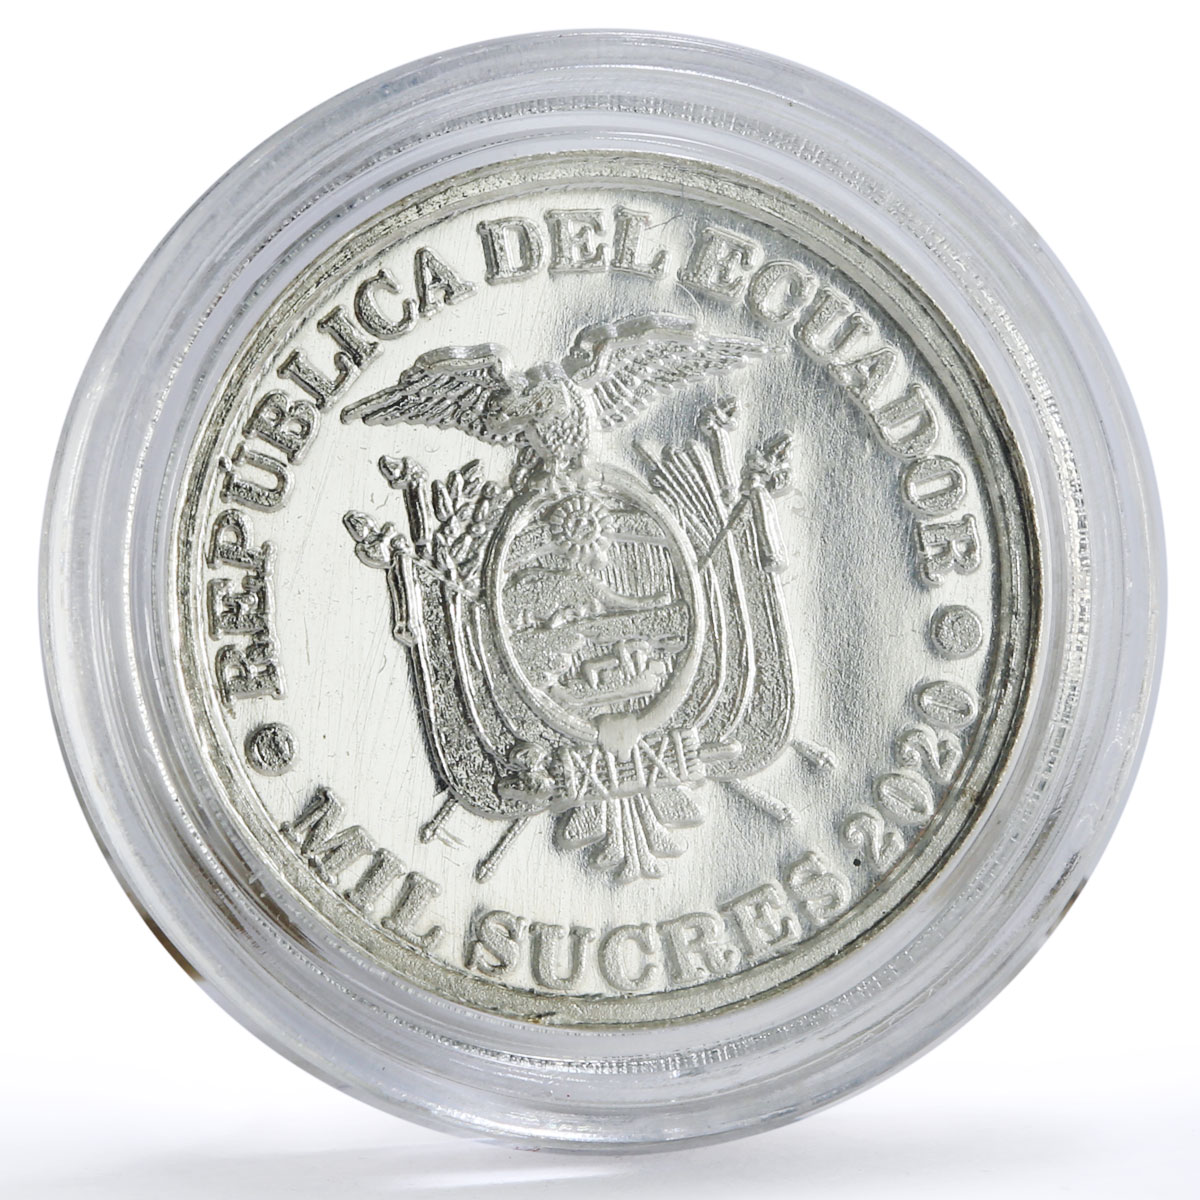 Ecuador 1000 sucres 51th President Jamil Mahuad Witt Politics silver coin 2020